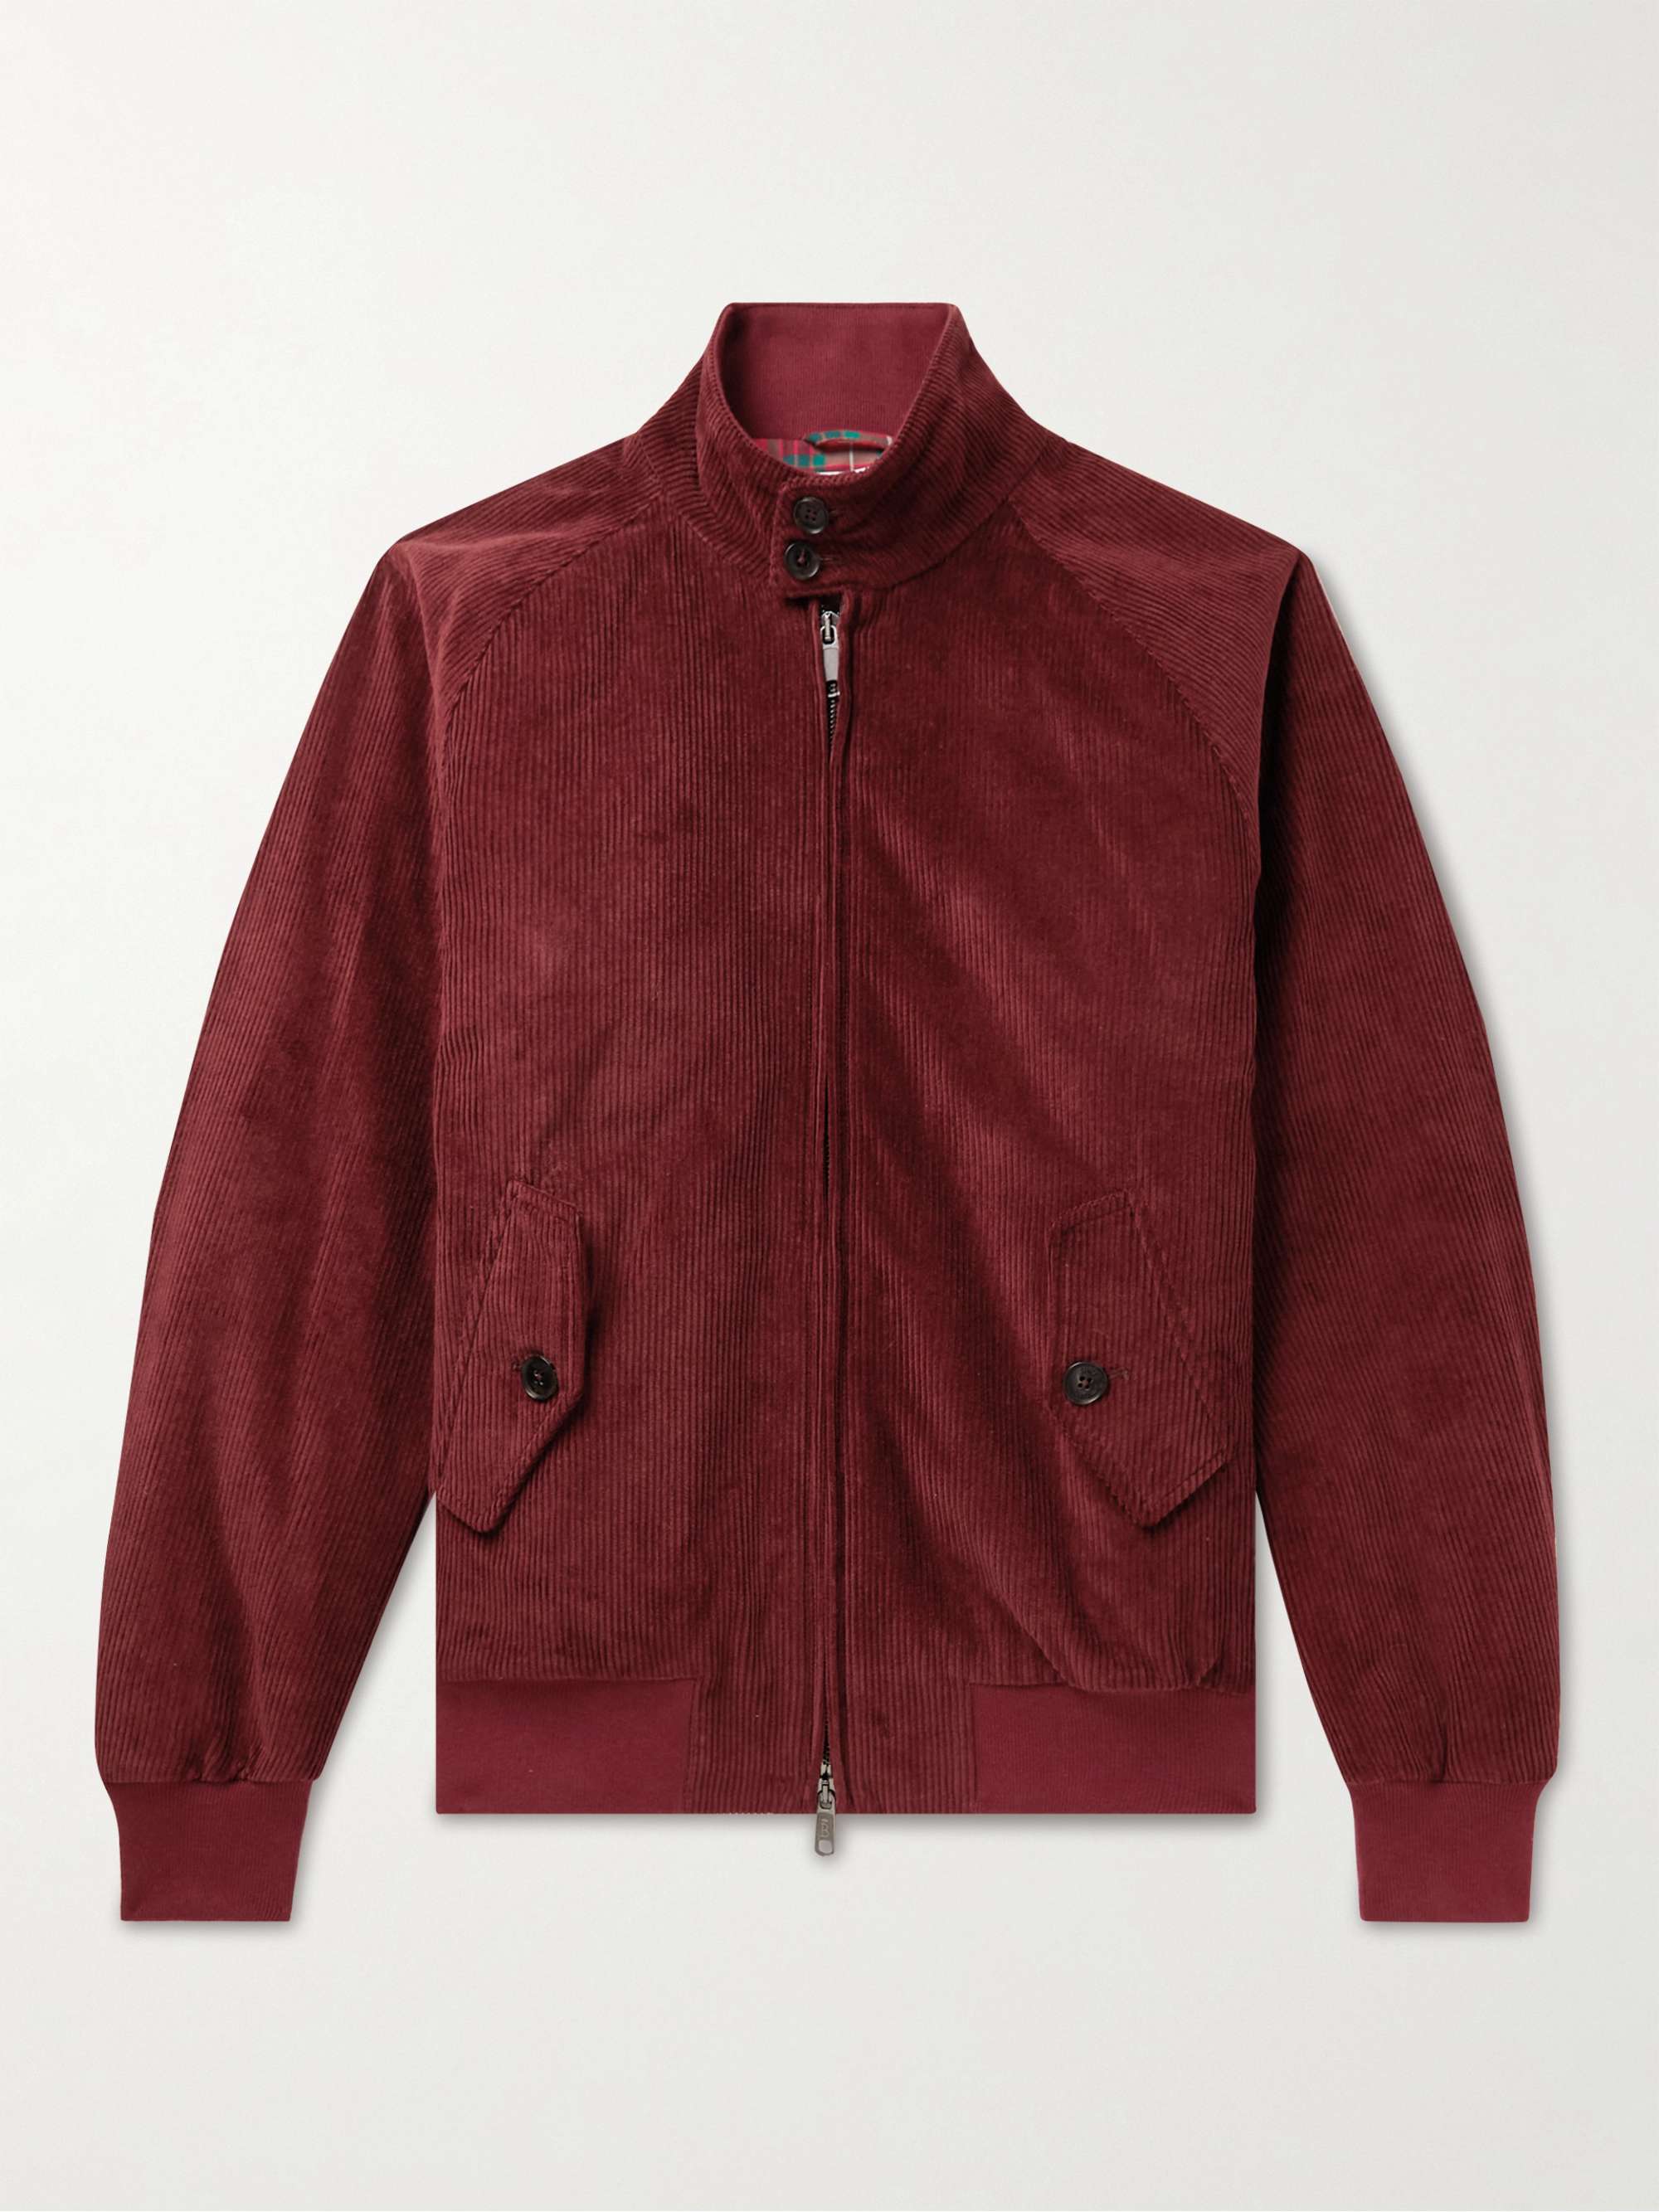 BARACUTA Cotton-Corduroy Jacket | MR PORTER